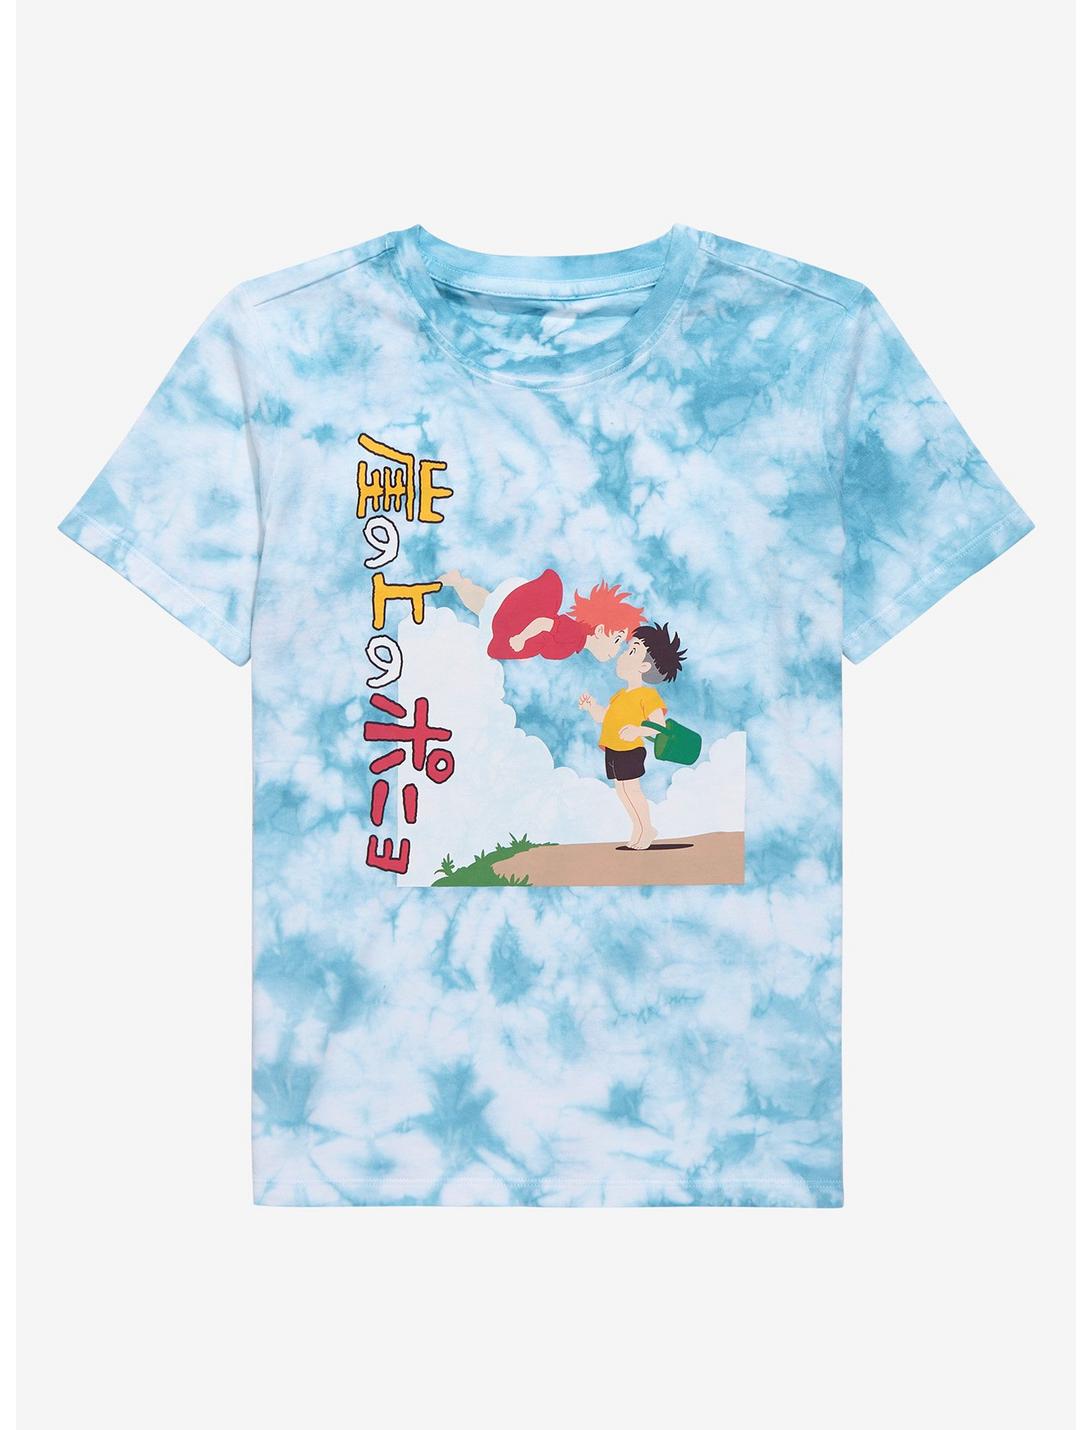 Studio Ghibli Ponyo Kanji Youth Tie-Dye T-Shirt - BoxLunch Exclusive, TIE DYE - BLYE, hi-res